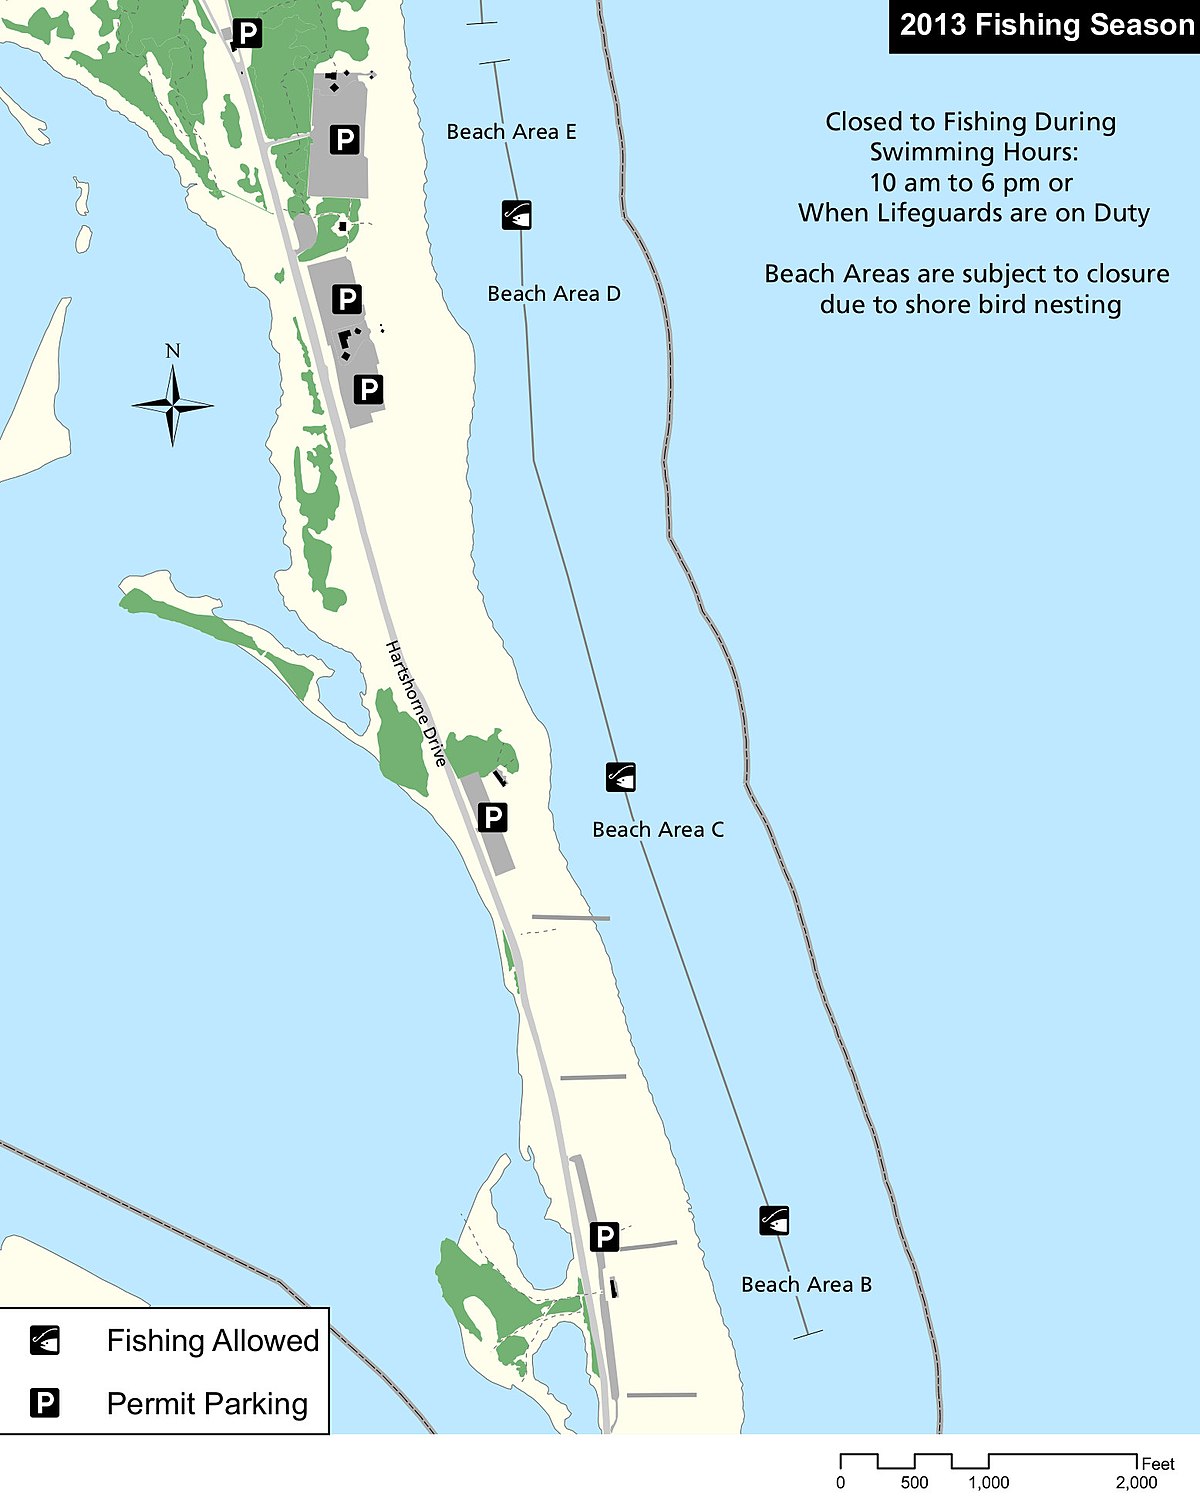 https://upload.wikimedia.org/wikipedia/commons/thumb/3/32/NPS_sandy-hook-south-fishing-map.jpg/1200px-NPS_sandy-hook-south-fishing-map.jpg